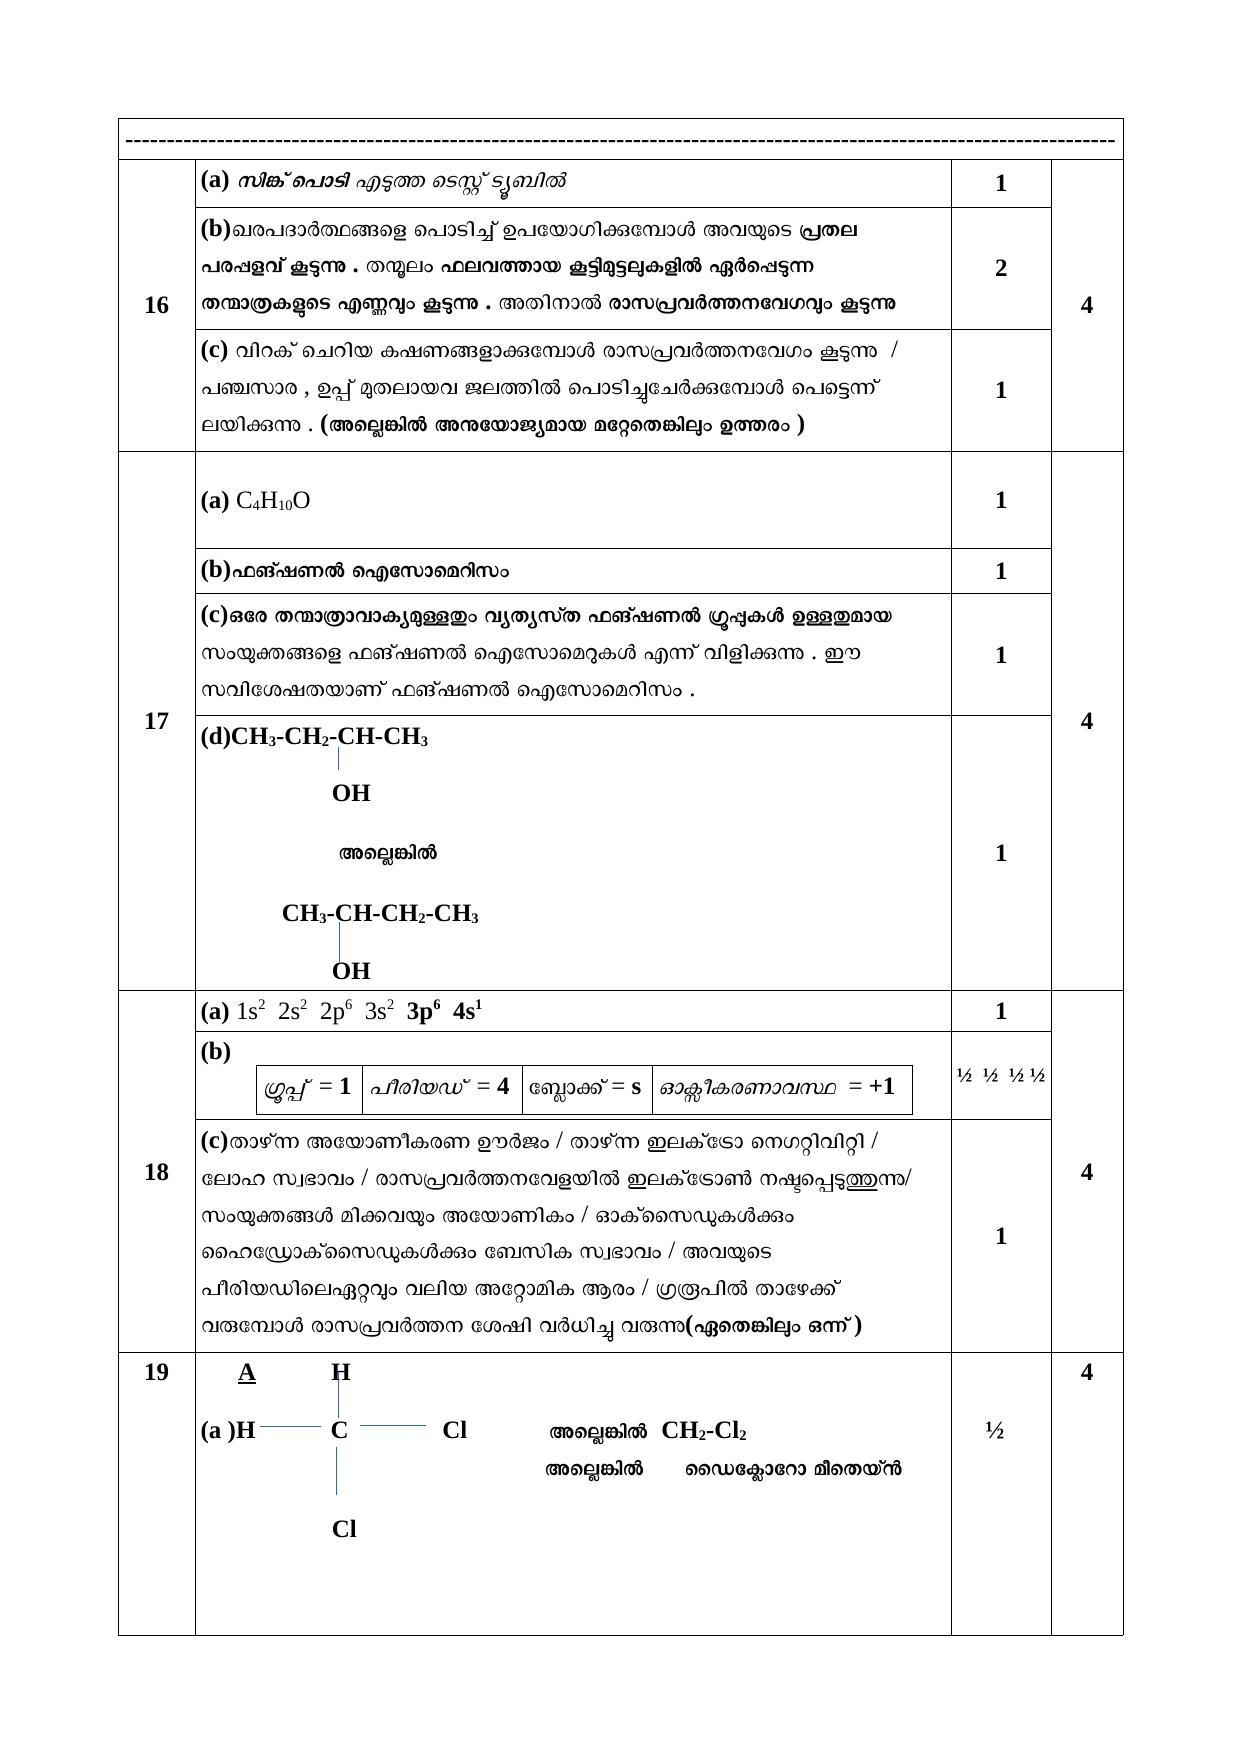 Kerala SSLC 2019 Chemistry Answer Key (MM) - Page 3